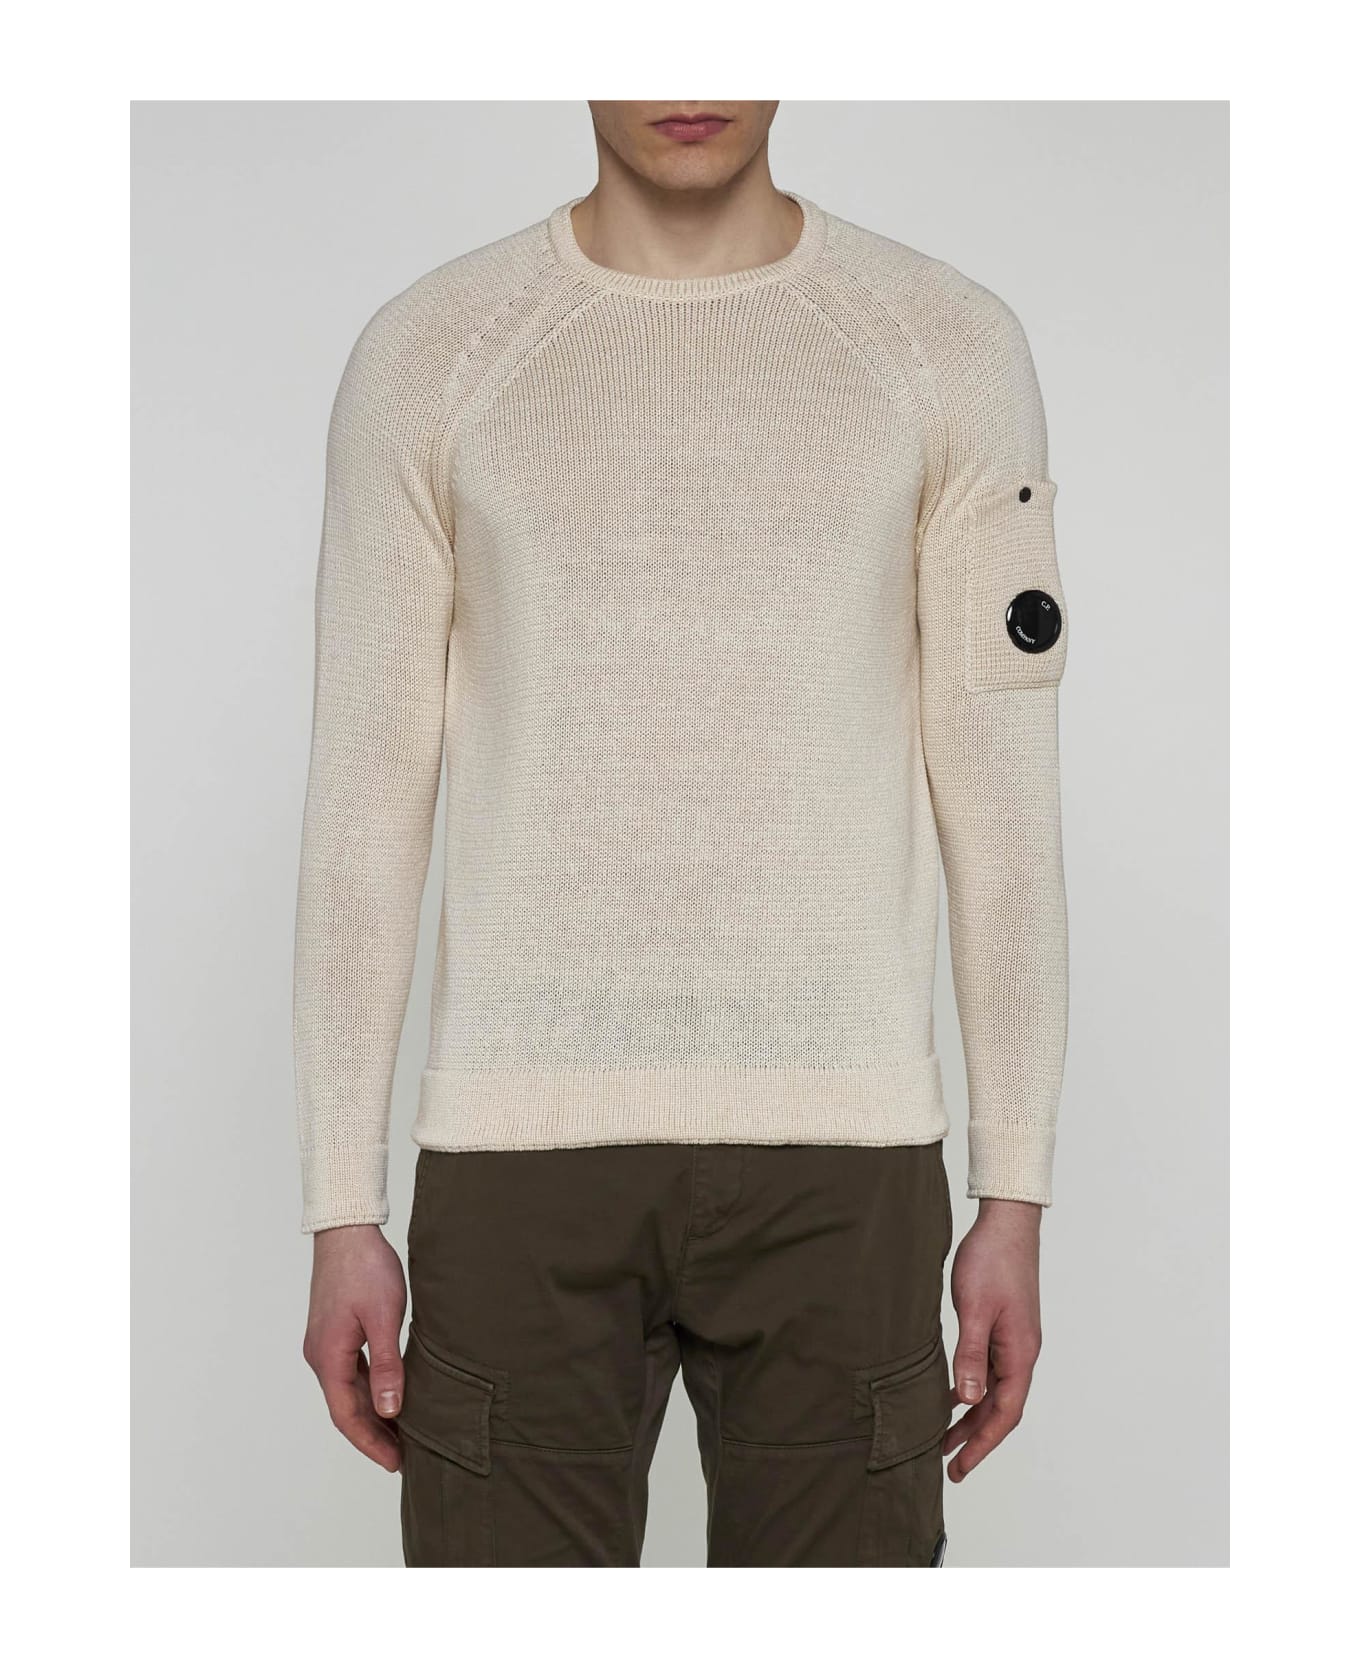 C.P. Company Cotton Sweater - PISTACHIO SHELL ニットウェア